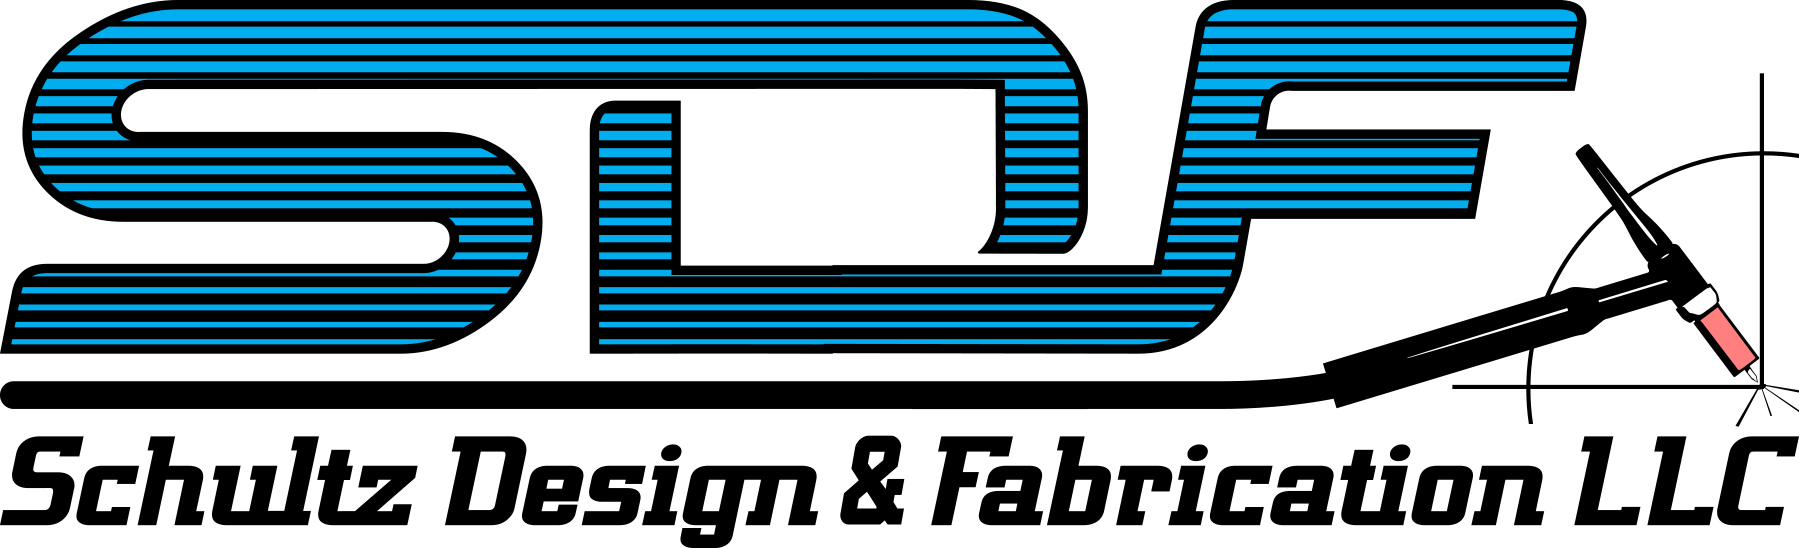 Schultz Design & Fabrication Logo